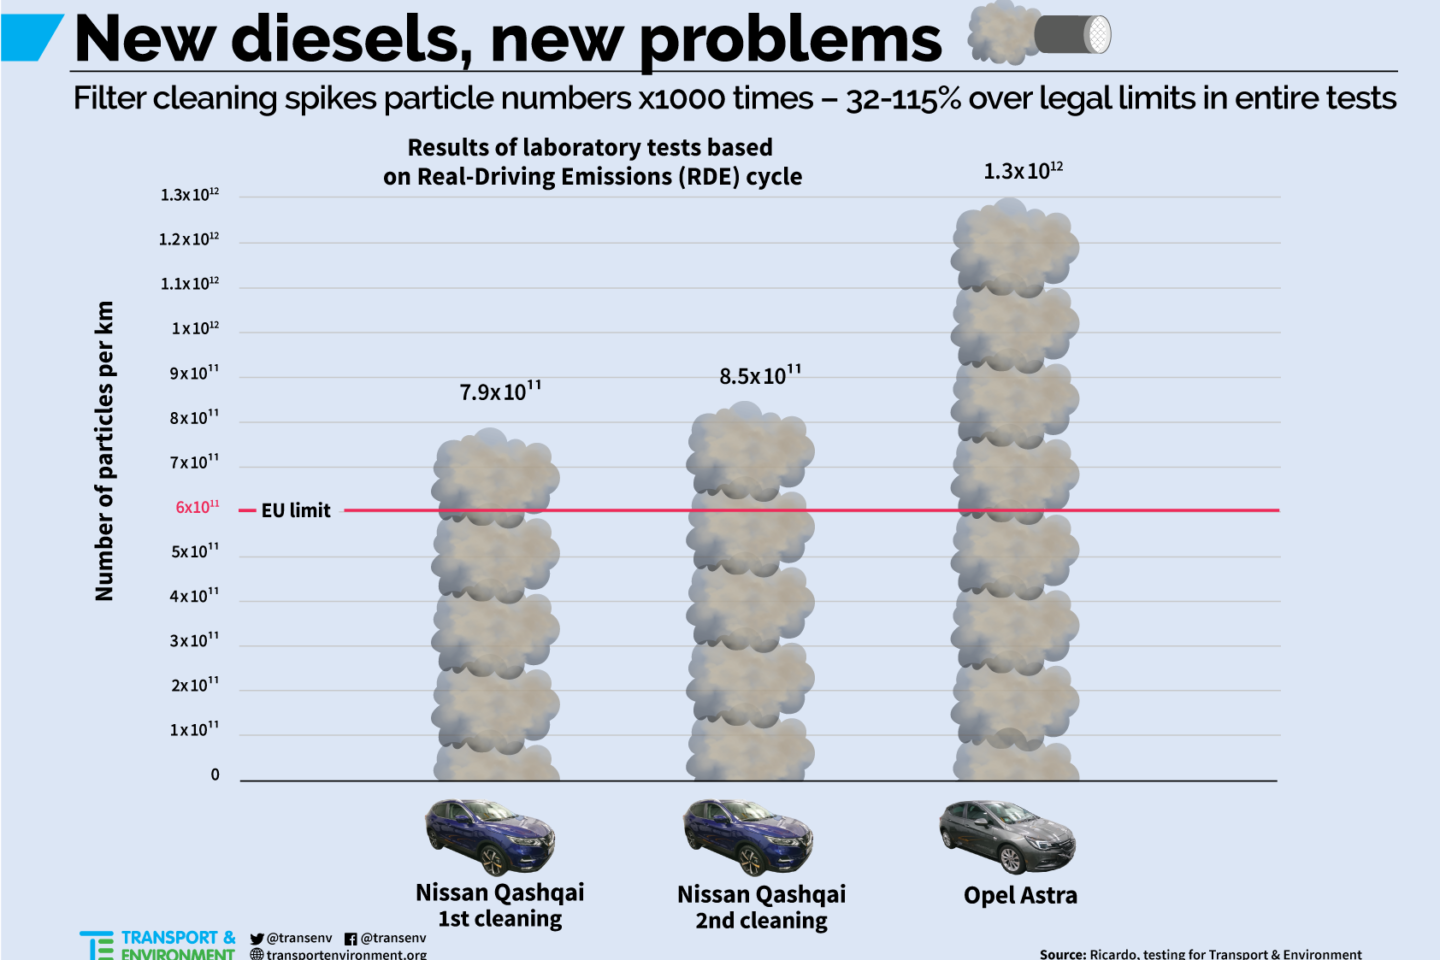 Transport & Environment, Emissões partículas